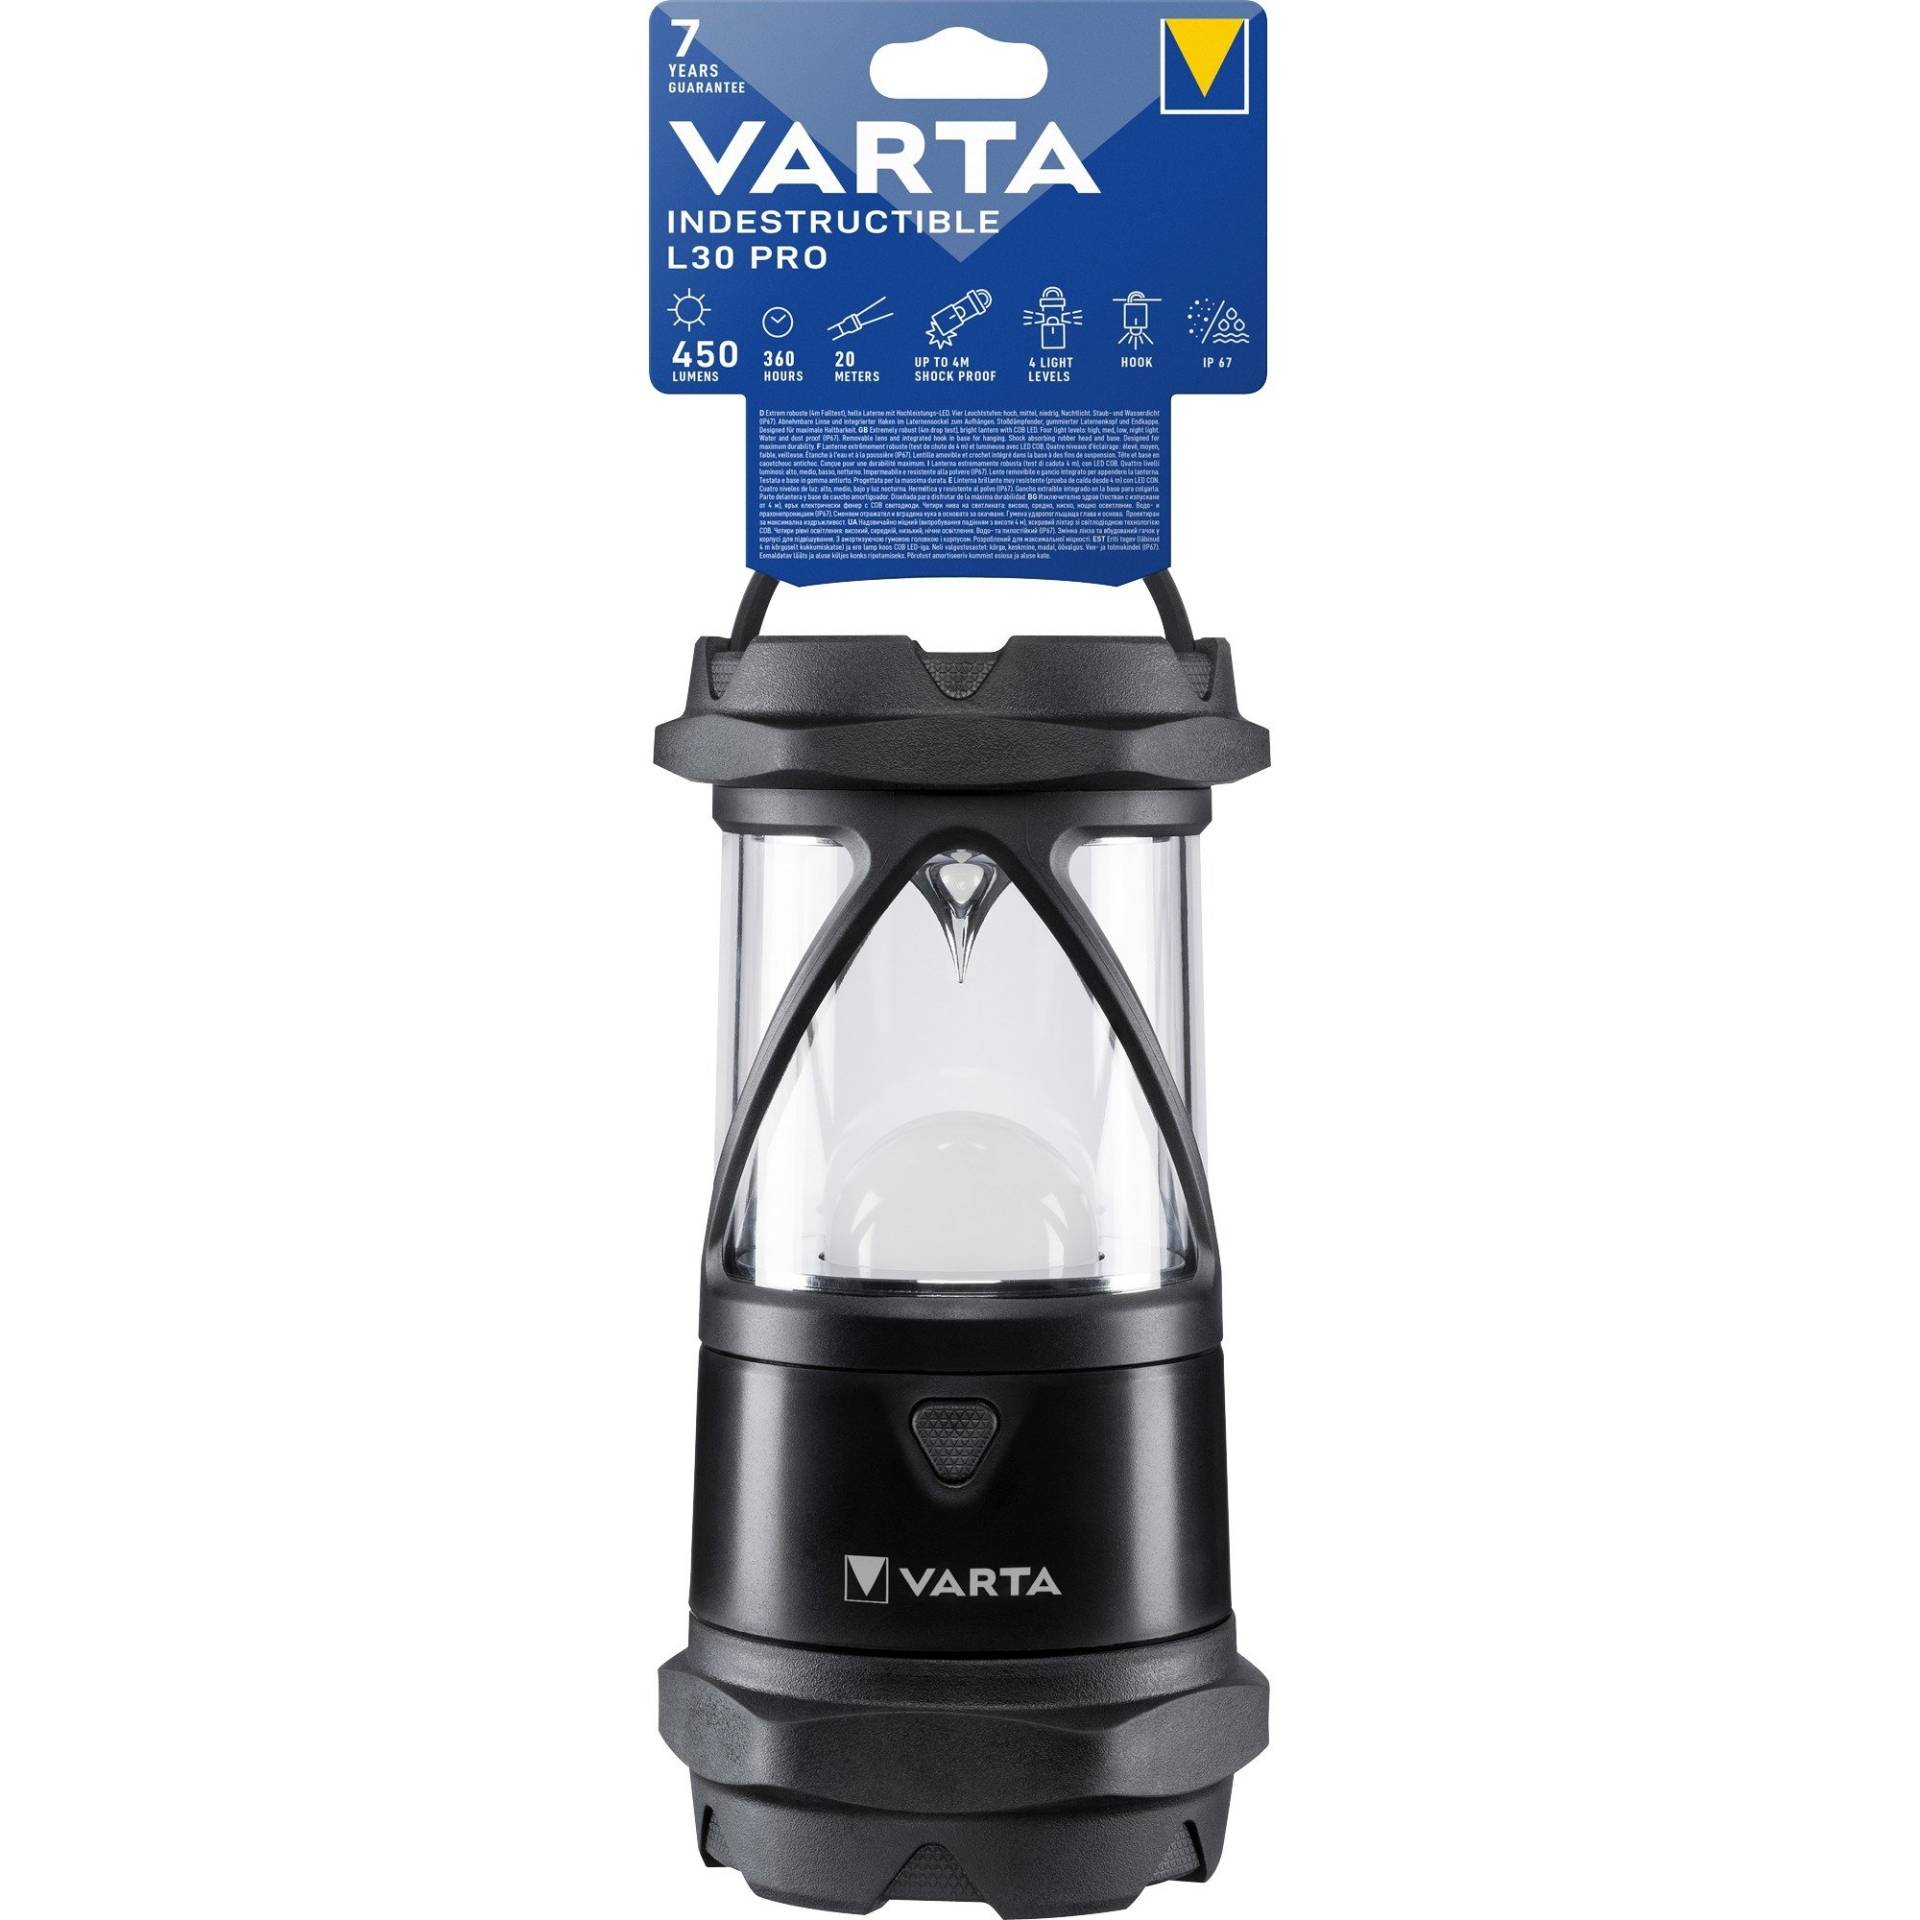 Indestructible L30 Pro, LED-Leuchte von Varta